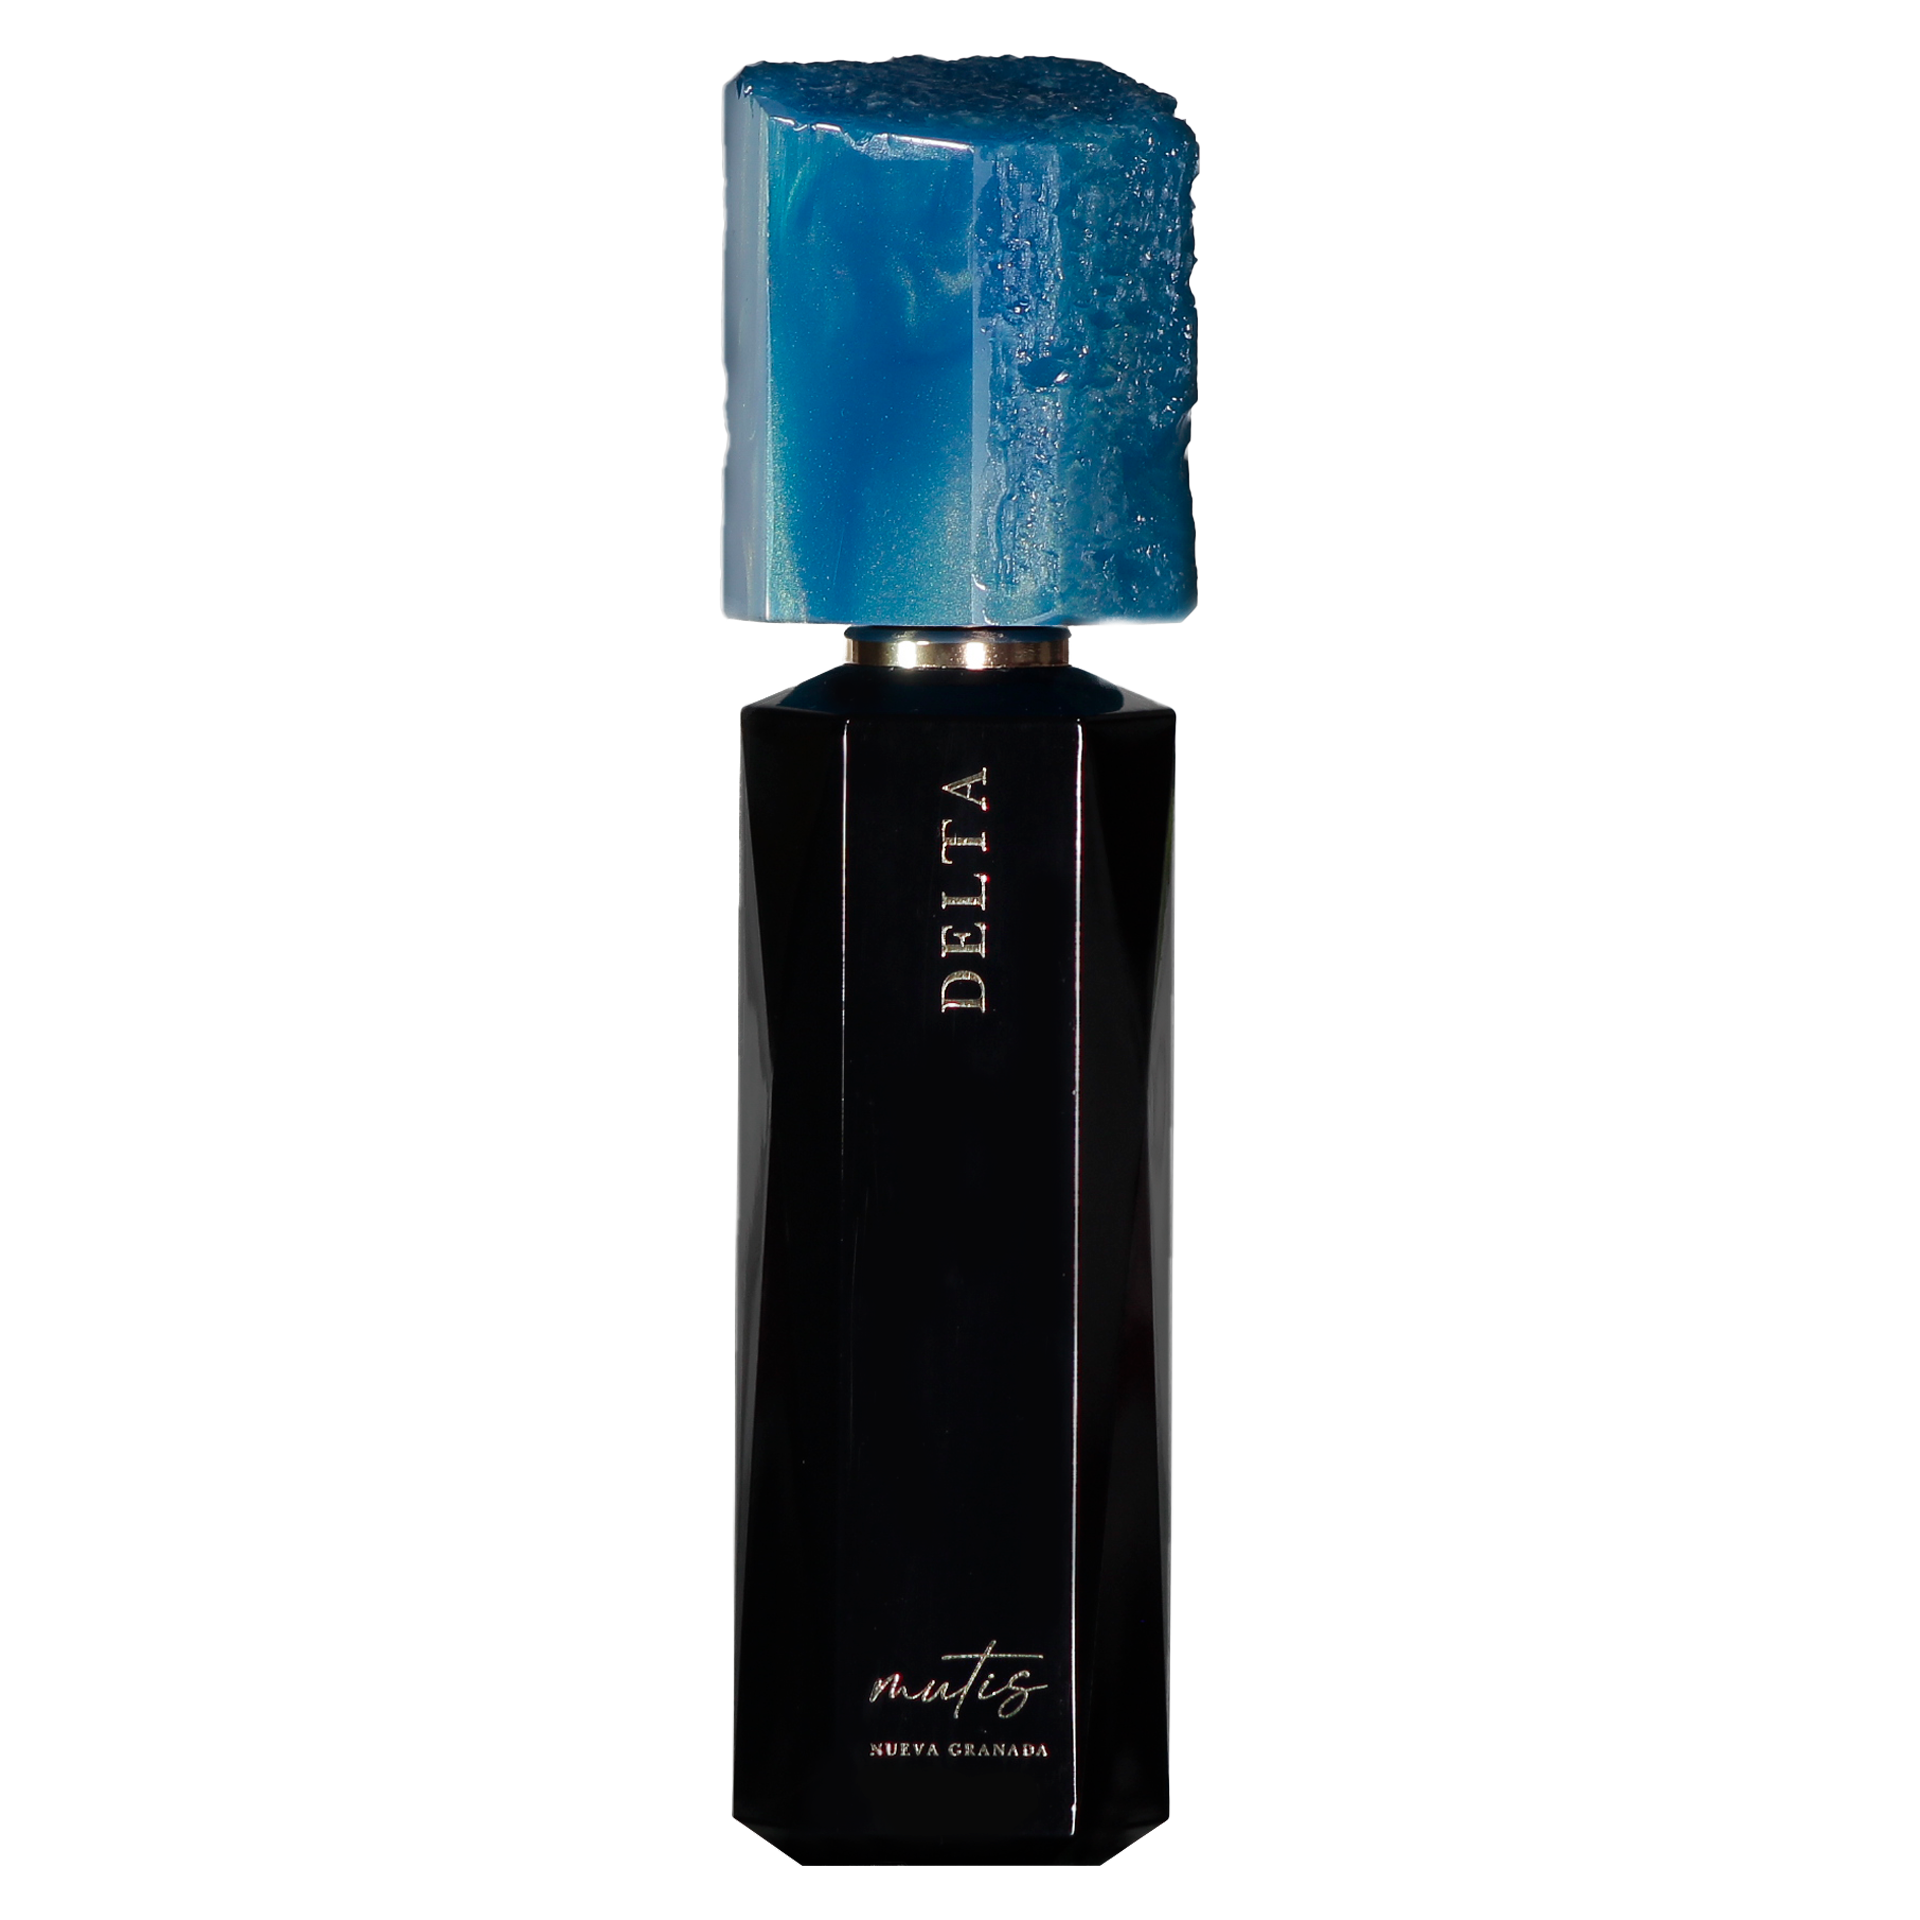 delta mutis nueva granada daring light perfumes niche barcelona - Delta